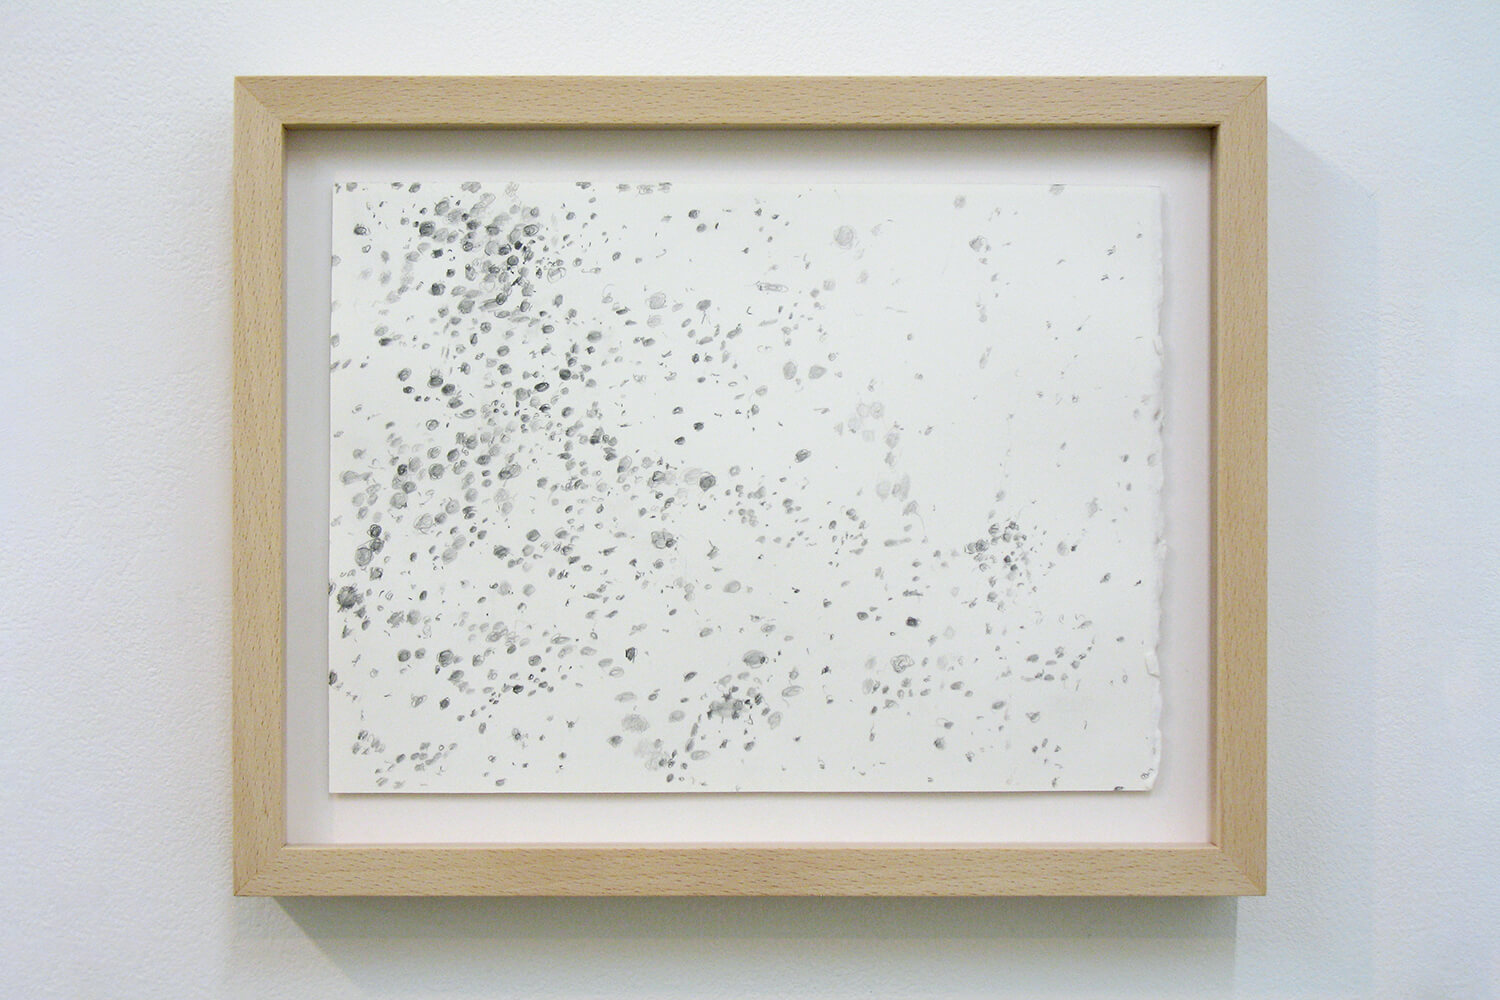 When the Dust Settles (d1)<br>Pencil on paper, 18.9 x 26 cm, 2010